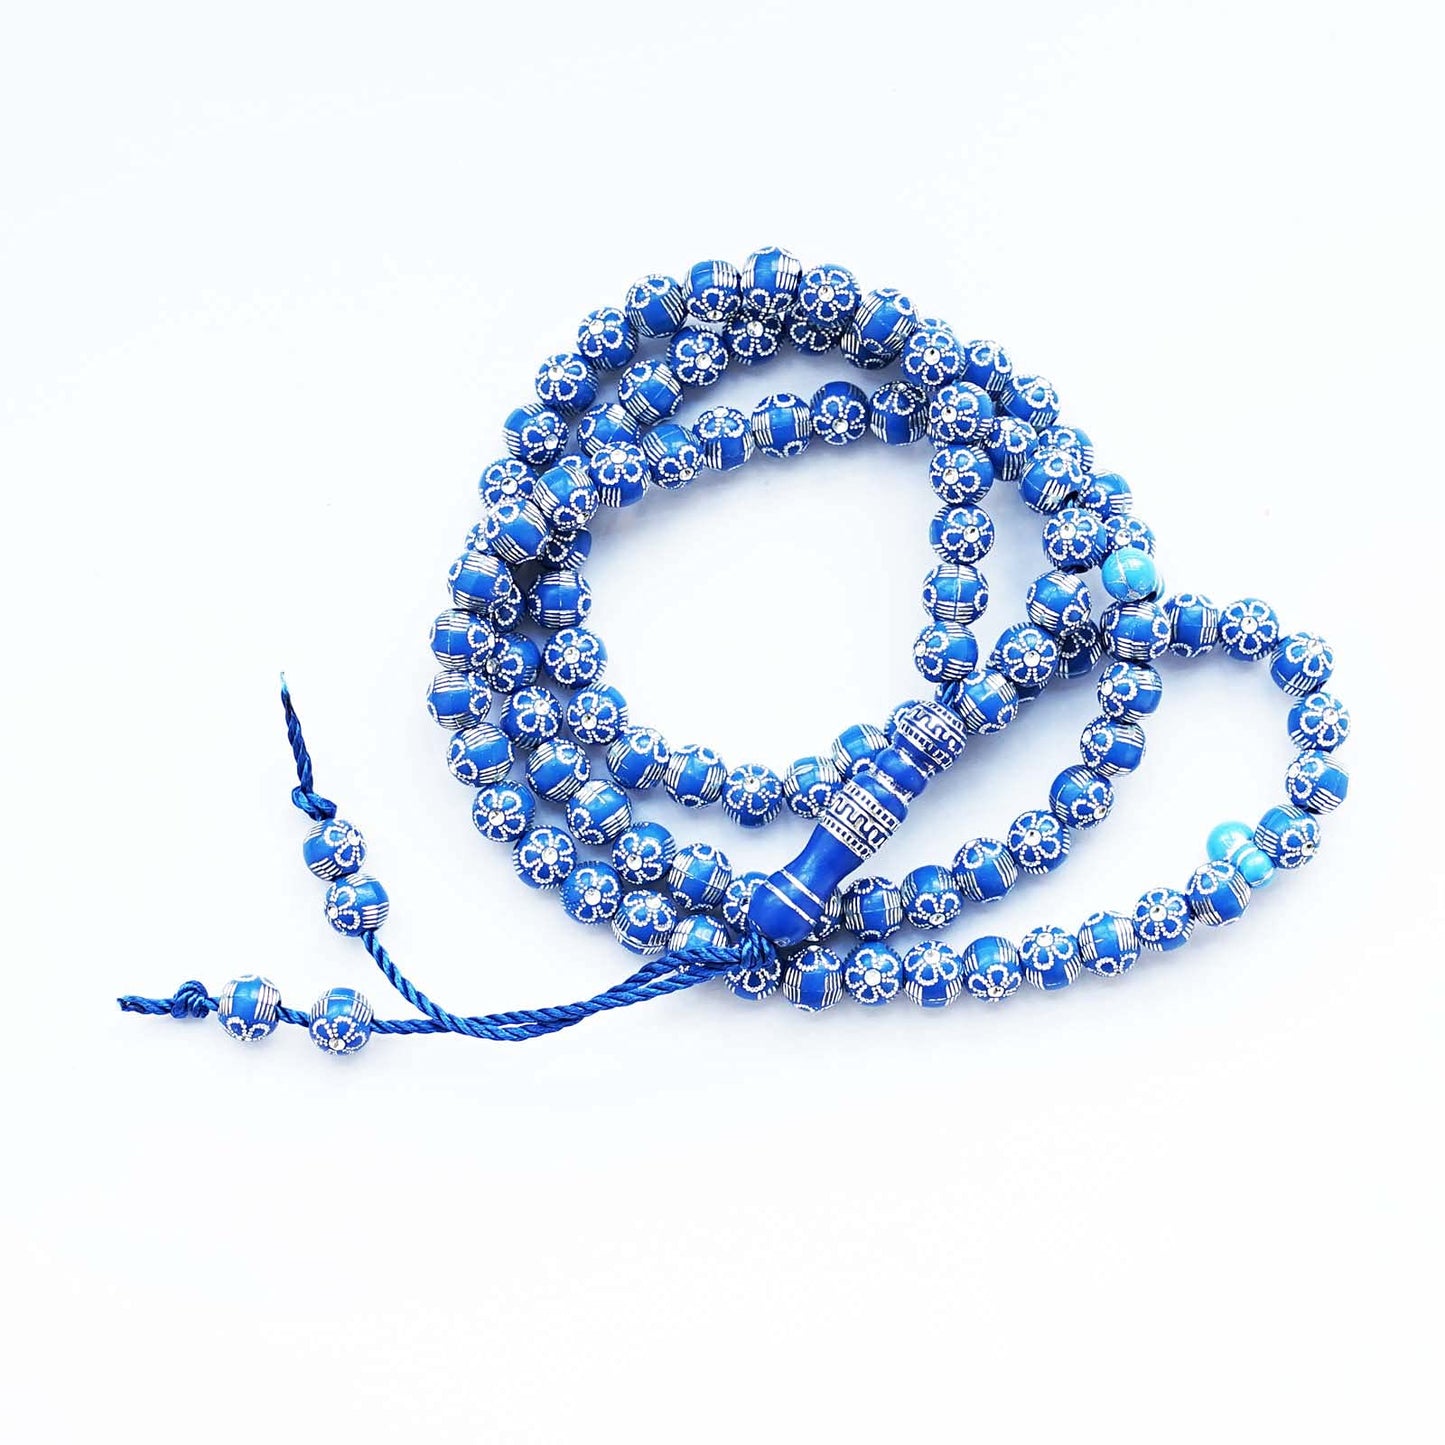 8mm Tasbih Prayer Beads Islamic Prayer Rosary Beads Muslim Islam Misbaha Tasbeeh Sibha 99 Prayer Beads Necklace Hand Bracelets (Blue)